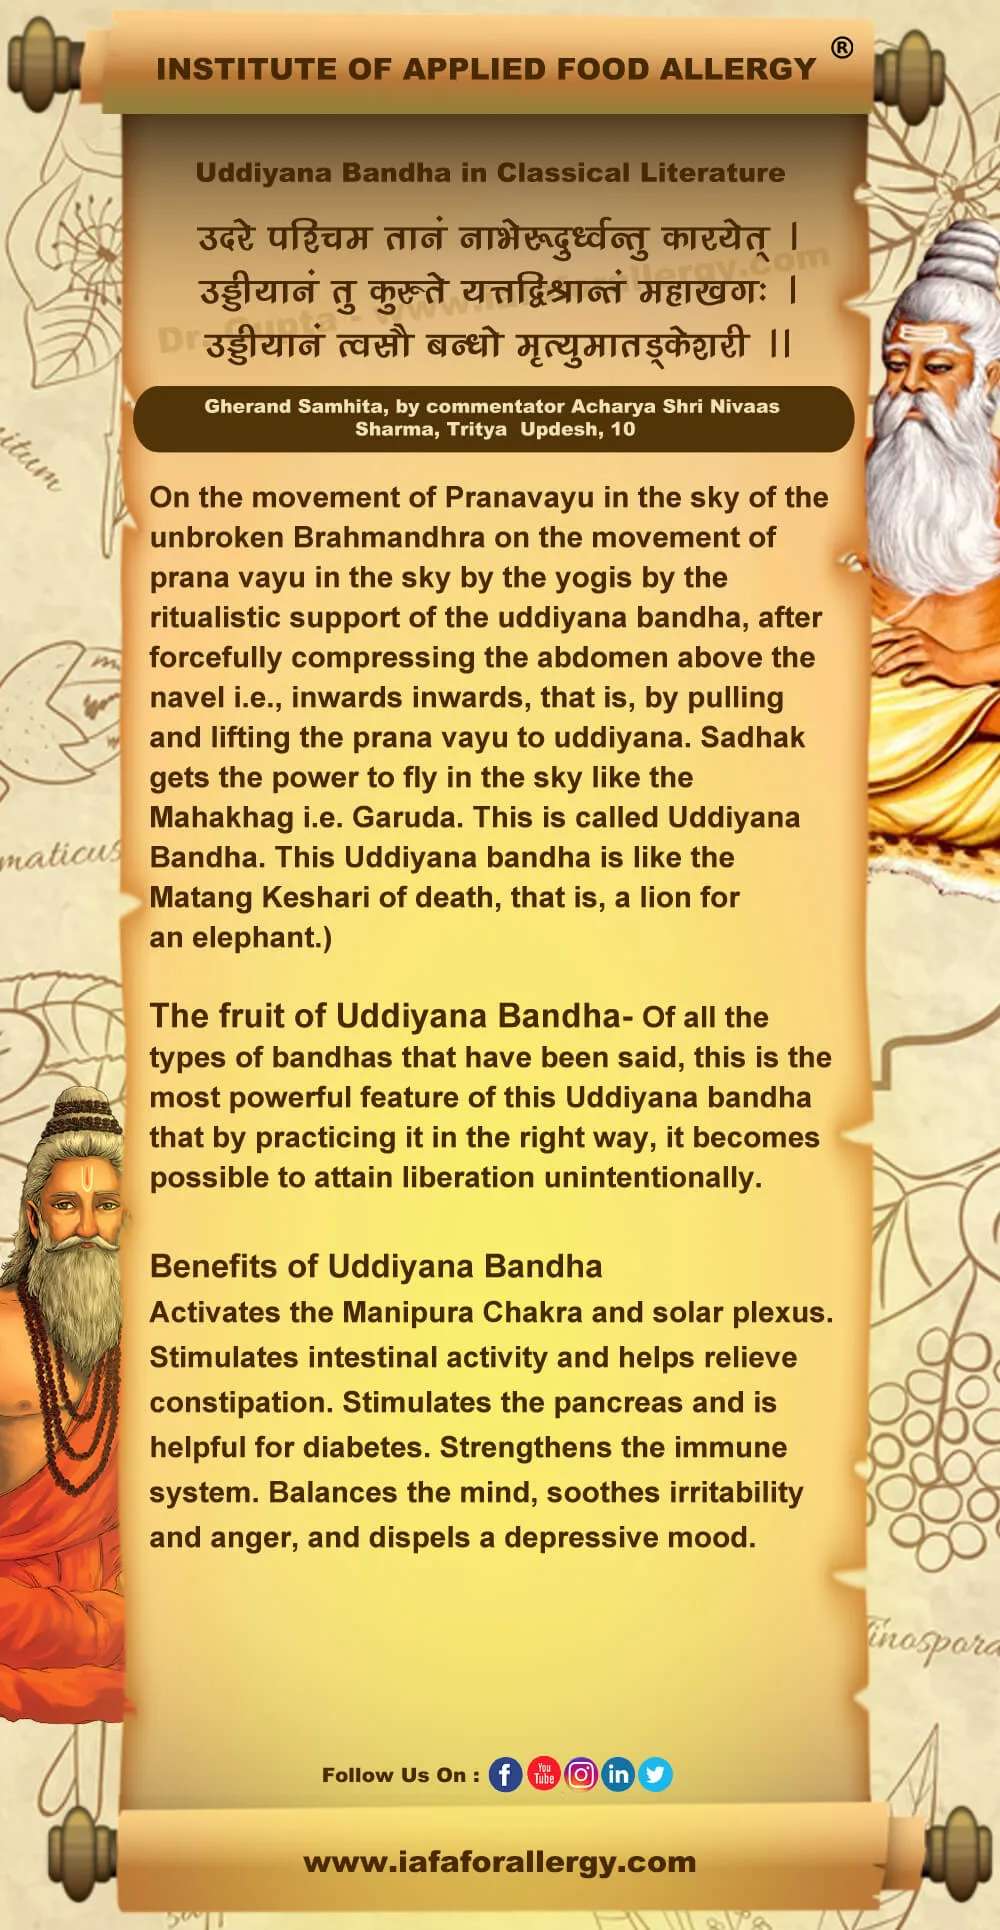 Uddiyana Bandha in Classical Literature